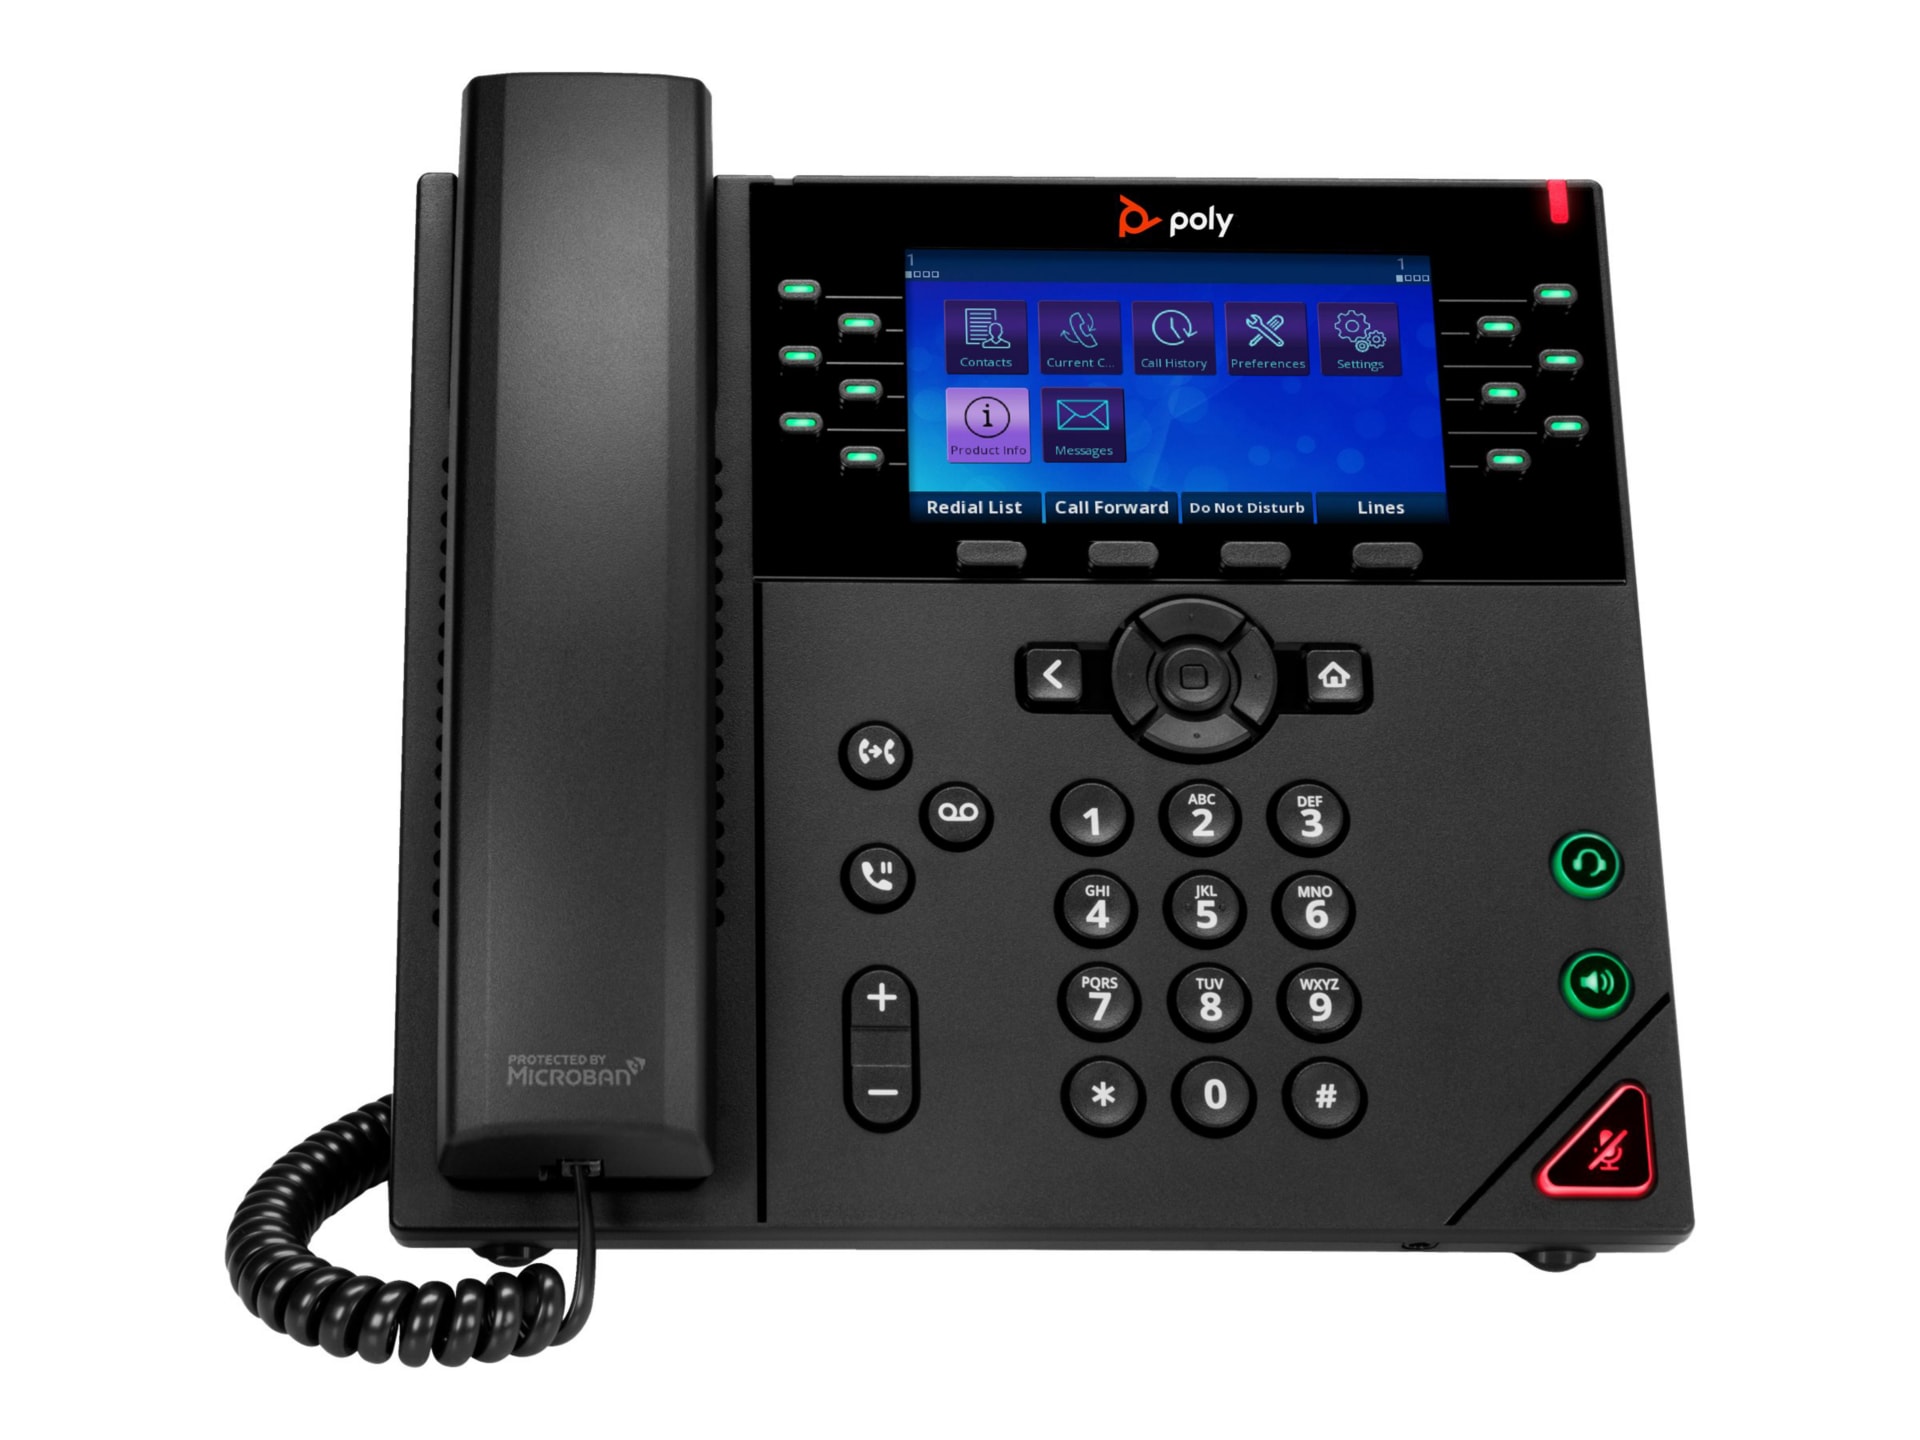 Poly VVX 450 IP Phone - Corded - Corded - Desktop, Wall Mountable - Black